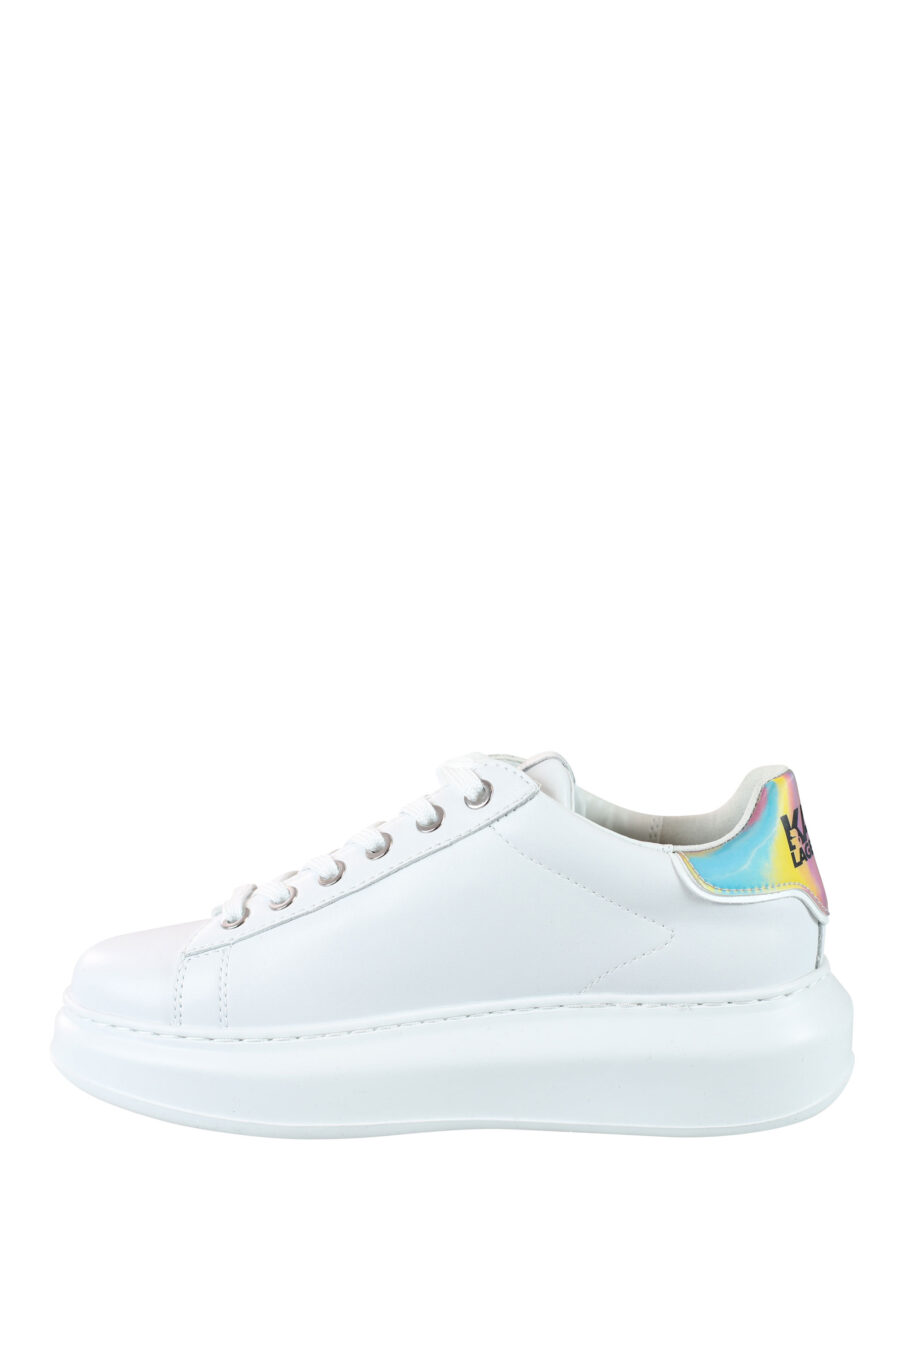 Zapatillas blancas con logo multicolor "rue st-guillaume" - IMG 0012